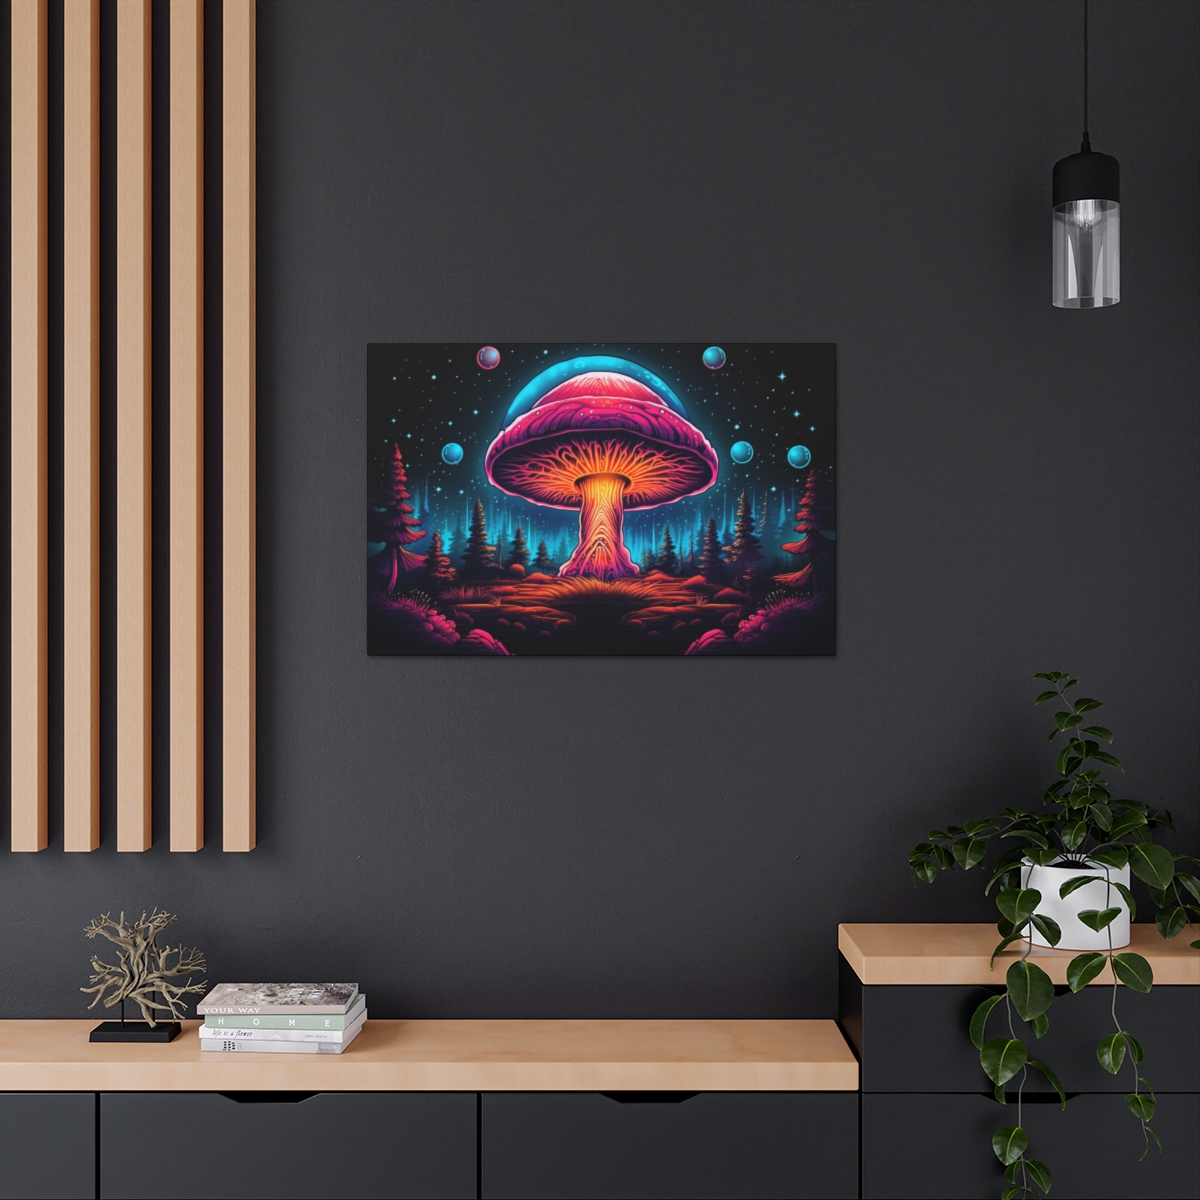 Psychedelic Mushroom Art: The UFO